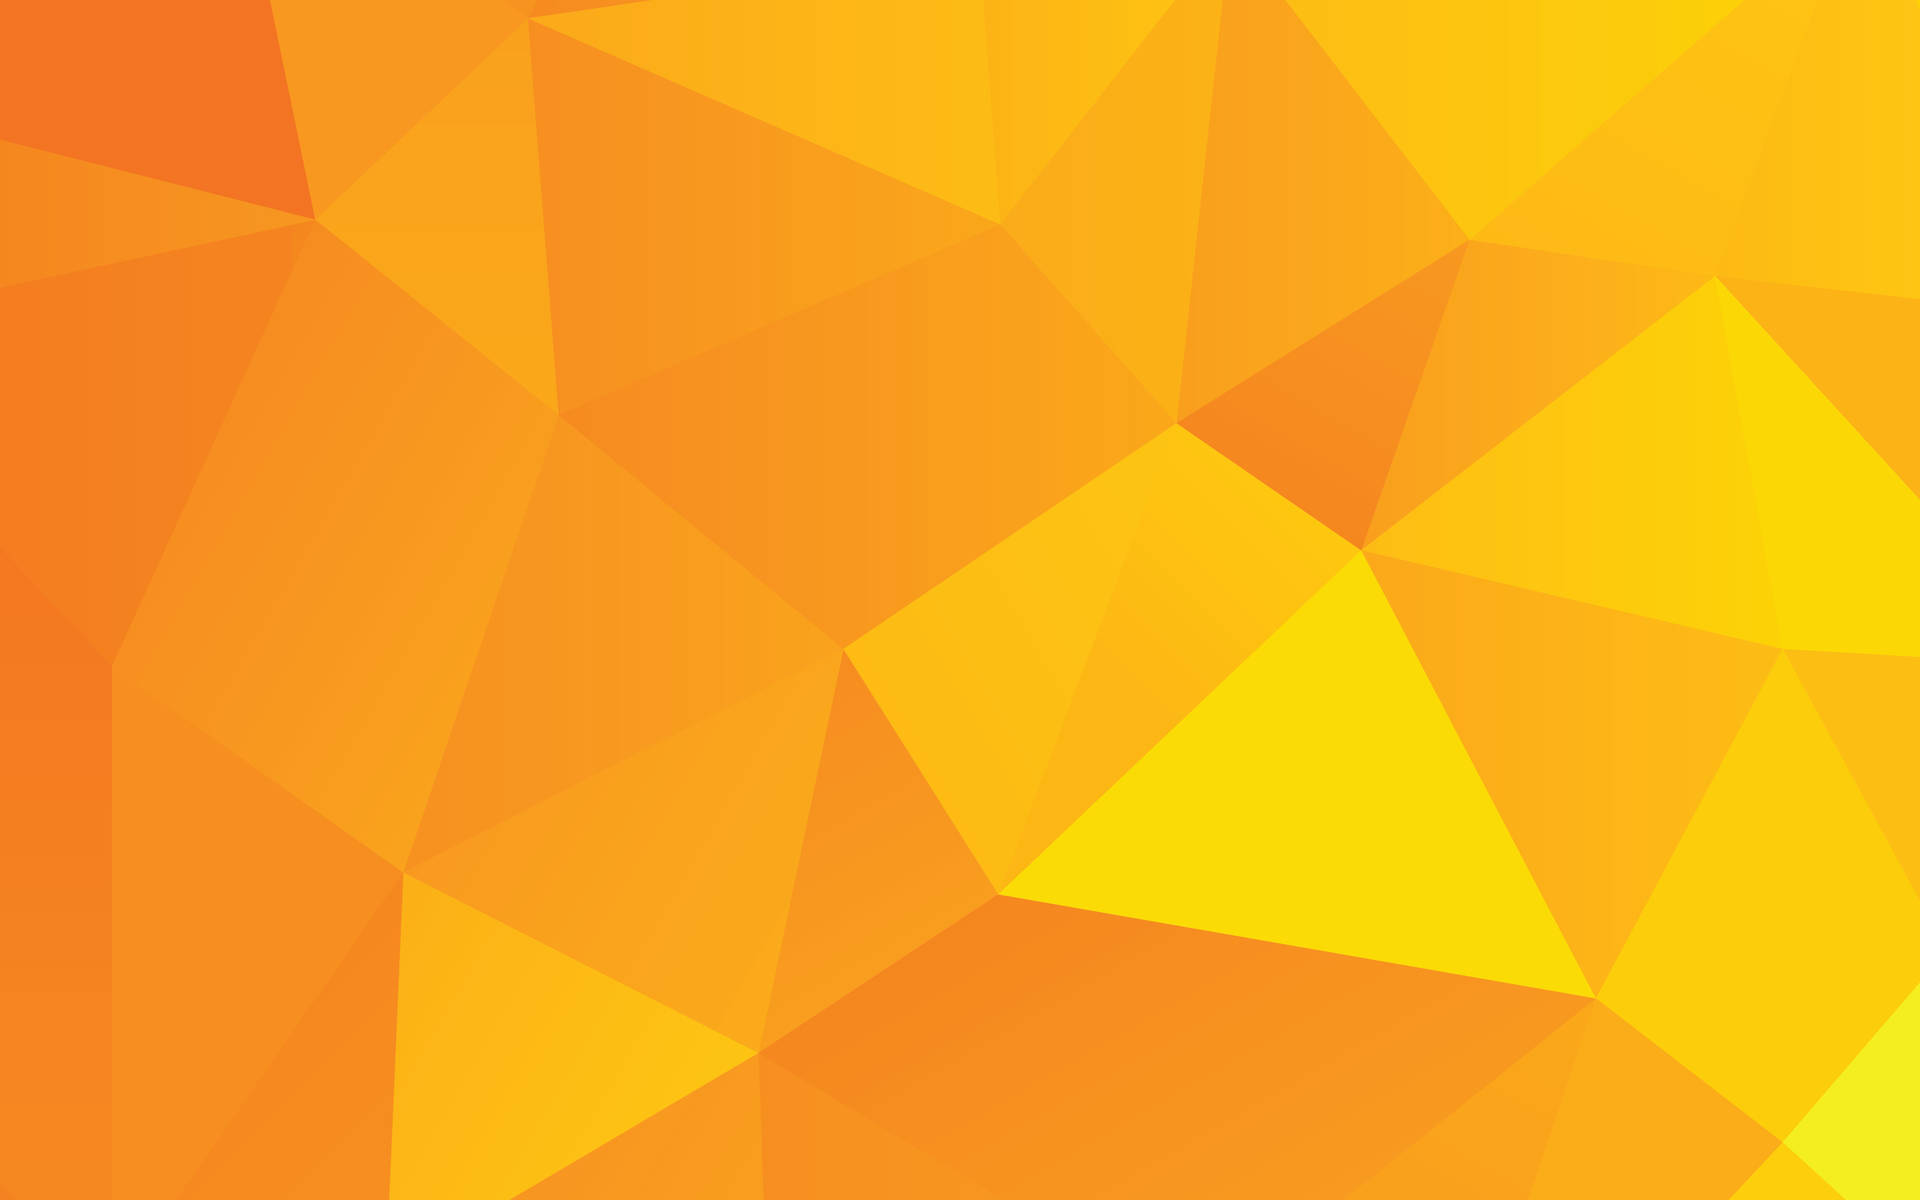 Yellow Geometric Wallpaper